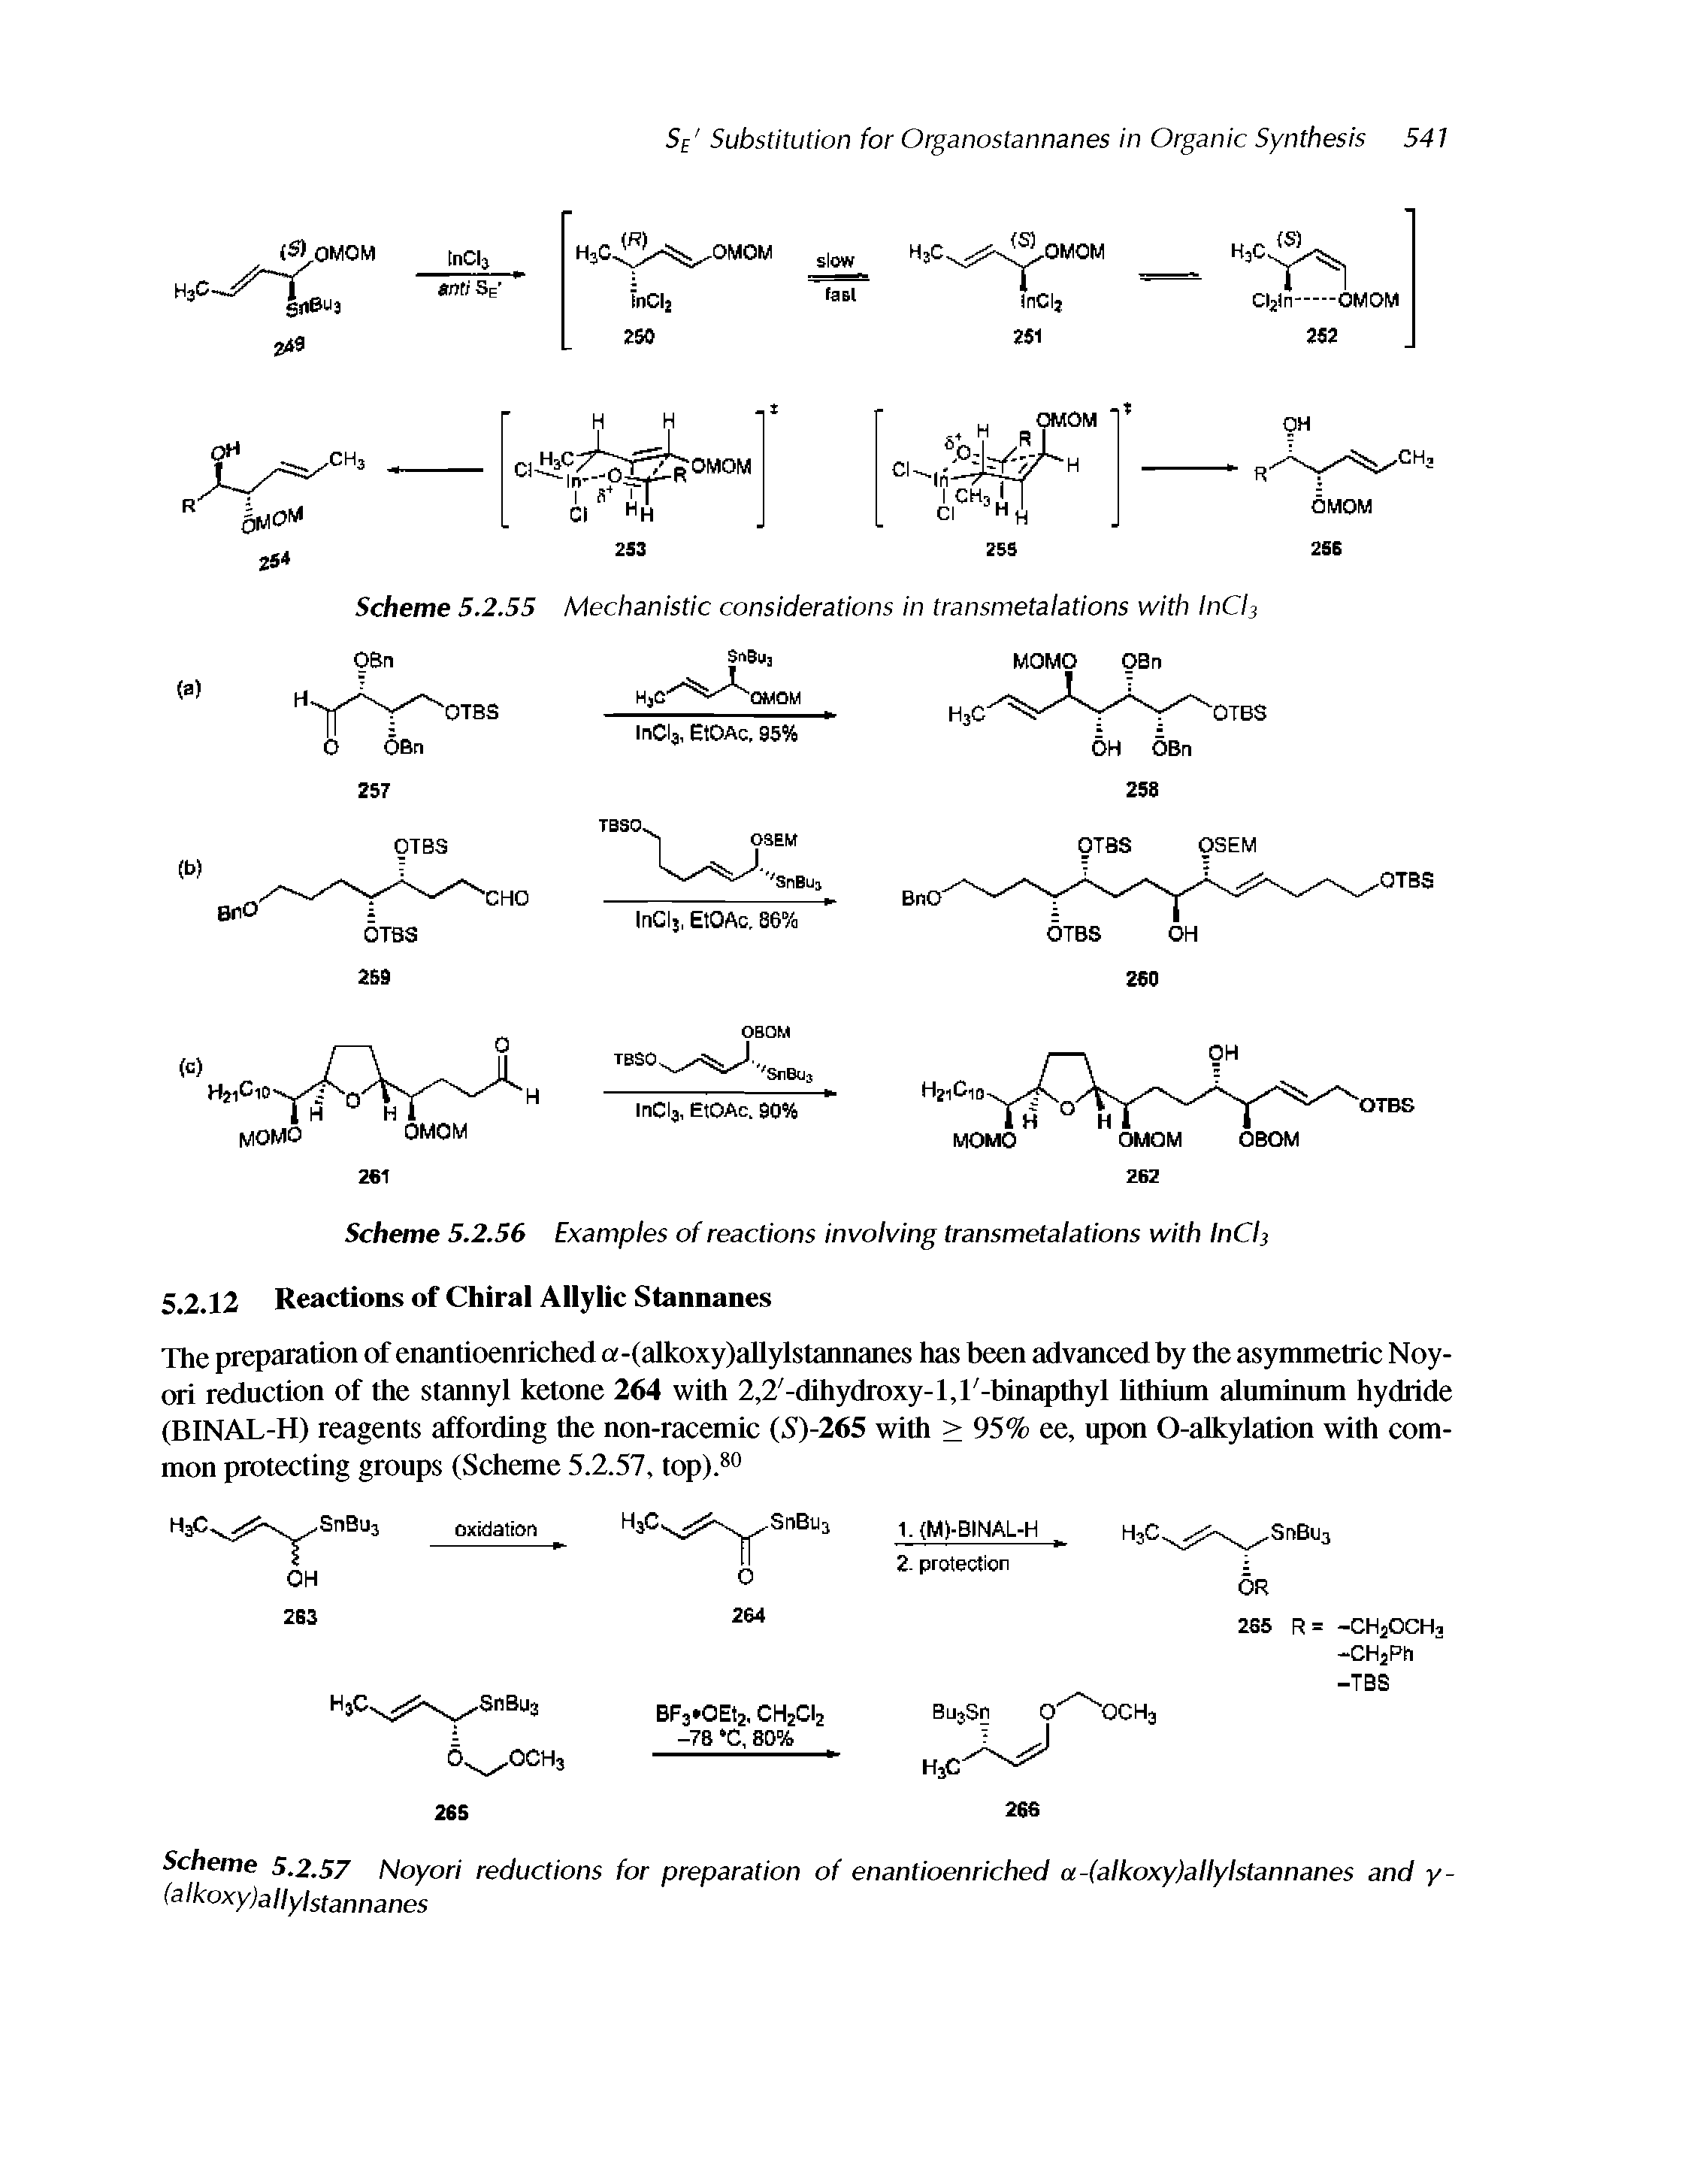 Scheme 5.2.57 Noyori reductions for preparation of enantioenriched a-(alkoxy)allylstannanes and y-( Ikoxylallylstannanes...